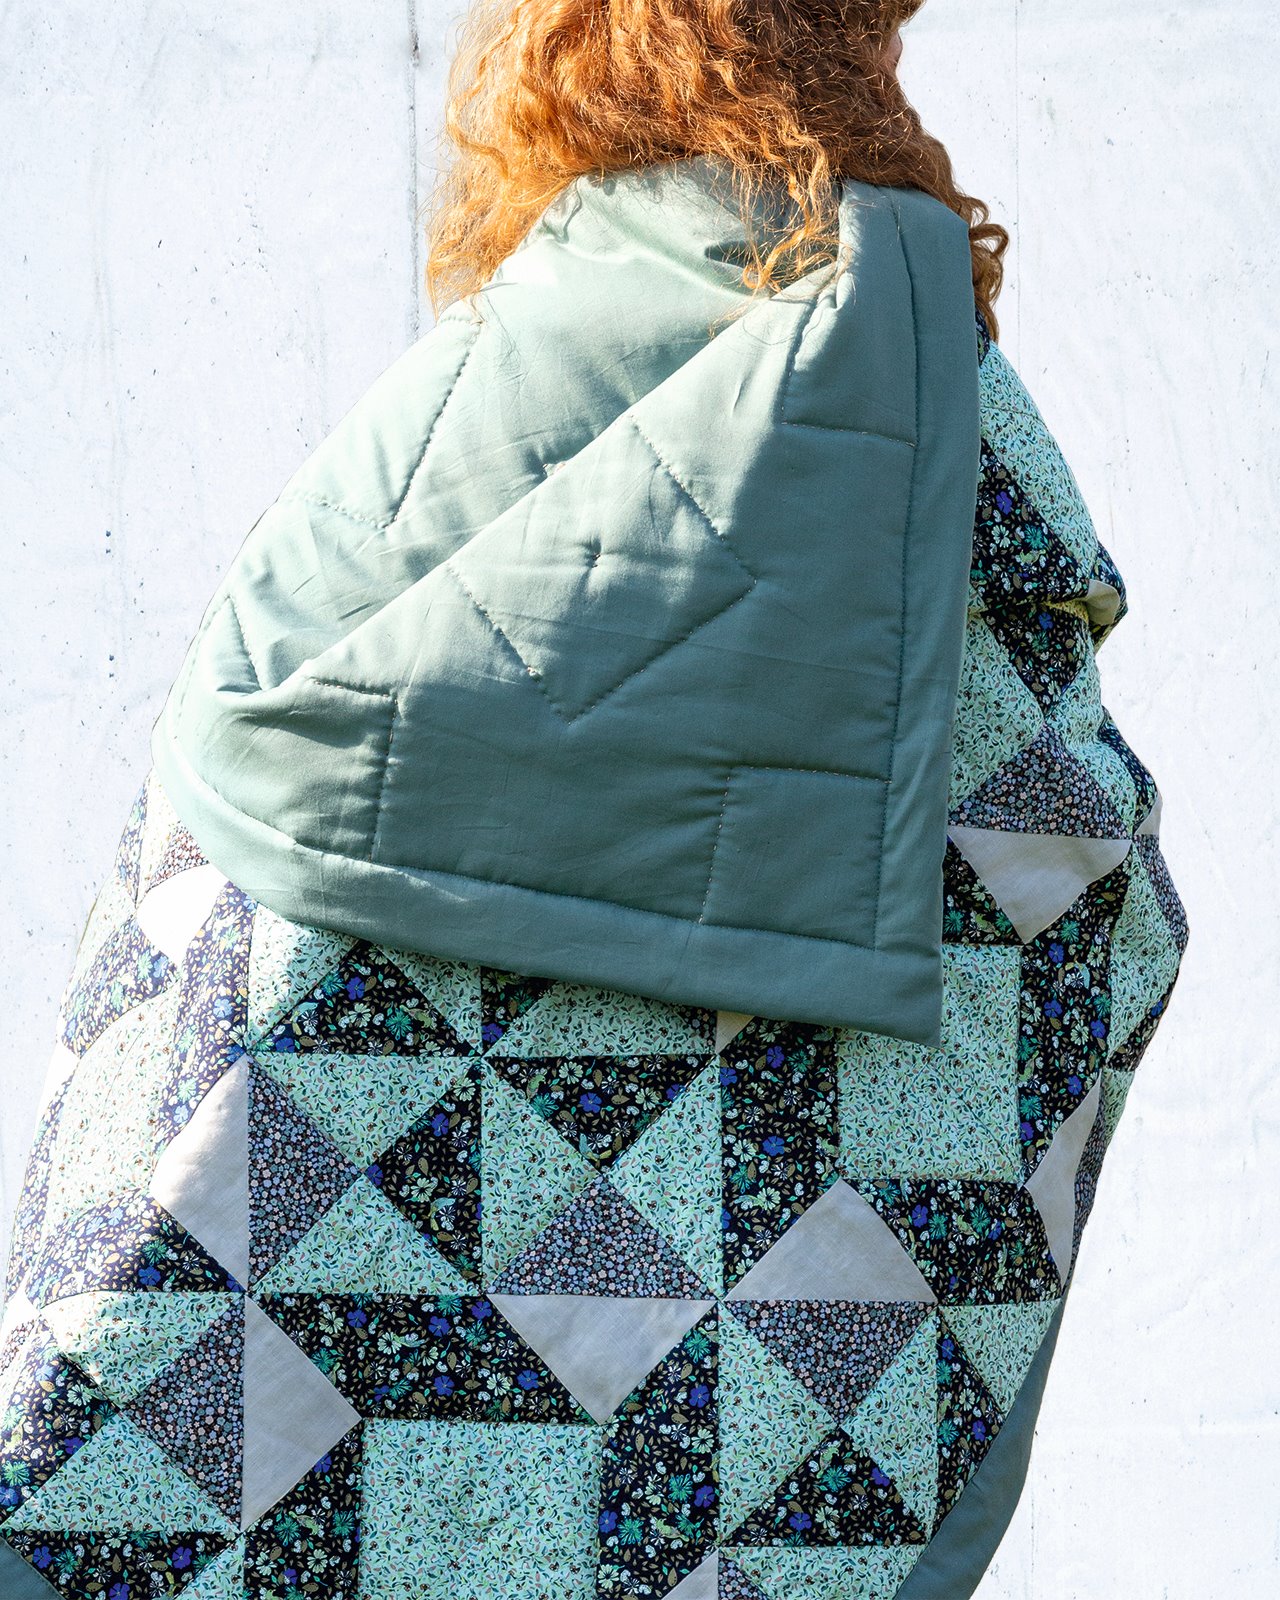 Quiltet patchwork blanket DIY9025_patcwork_blanket-image.jpg